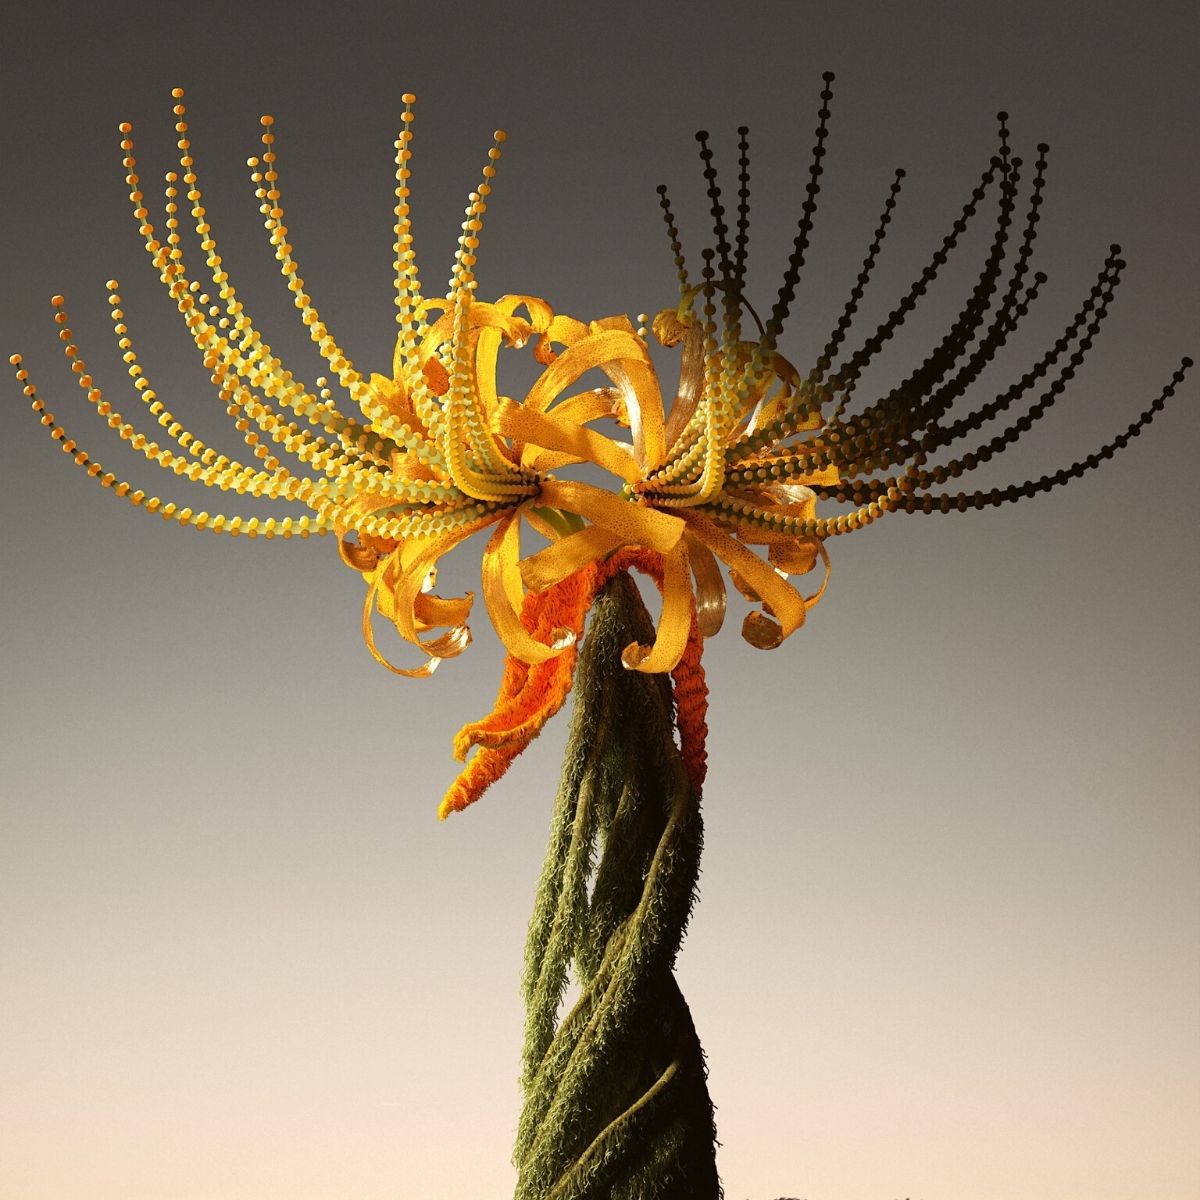 ondrej-zunka-explores-human-dependency-on-plant-species-through-digital-botanicals-featured